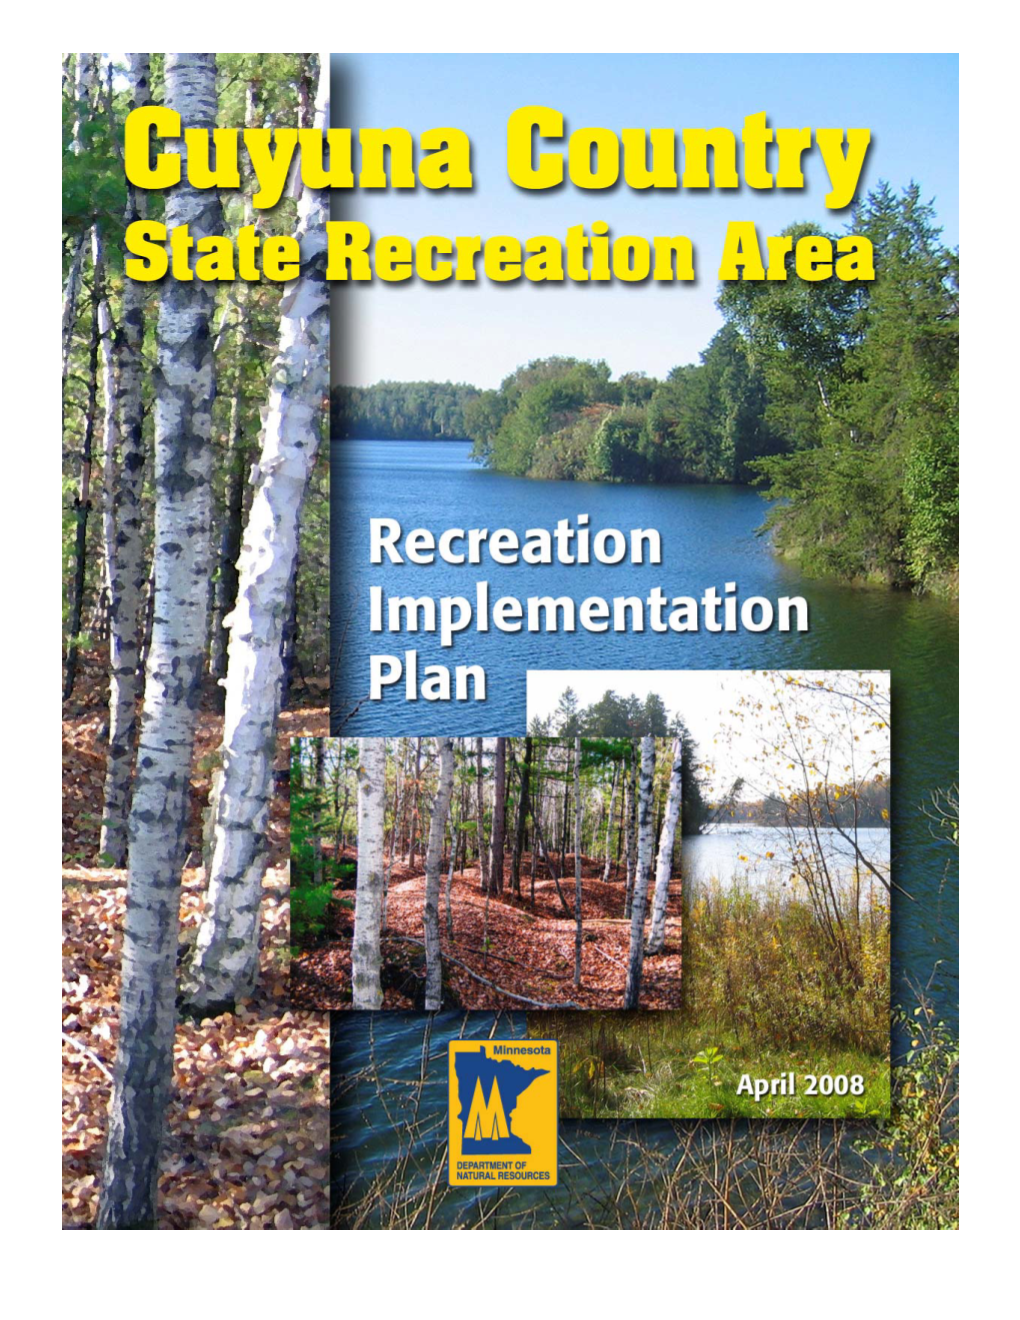 Cuyuna Country SRA Recreation Implementation Plan